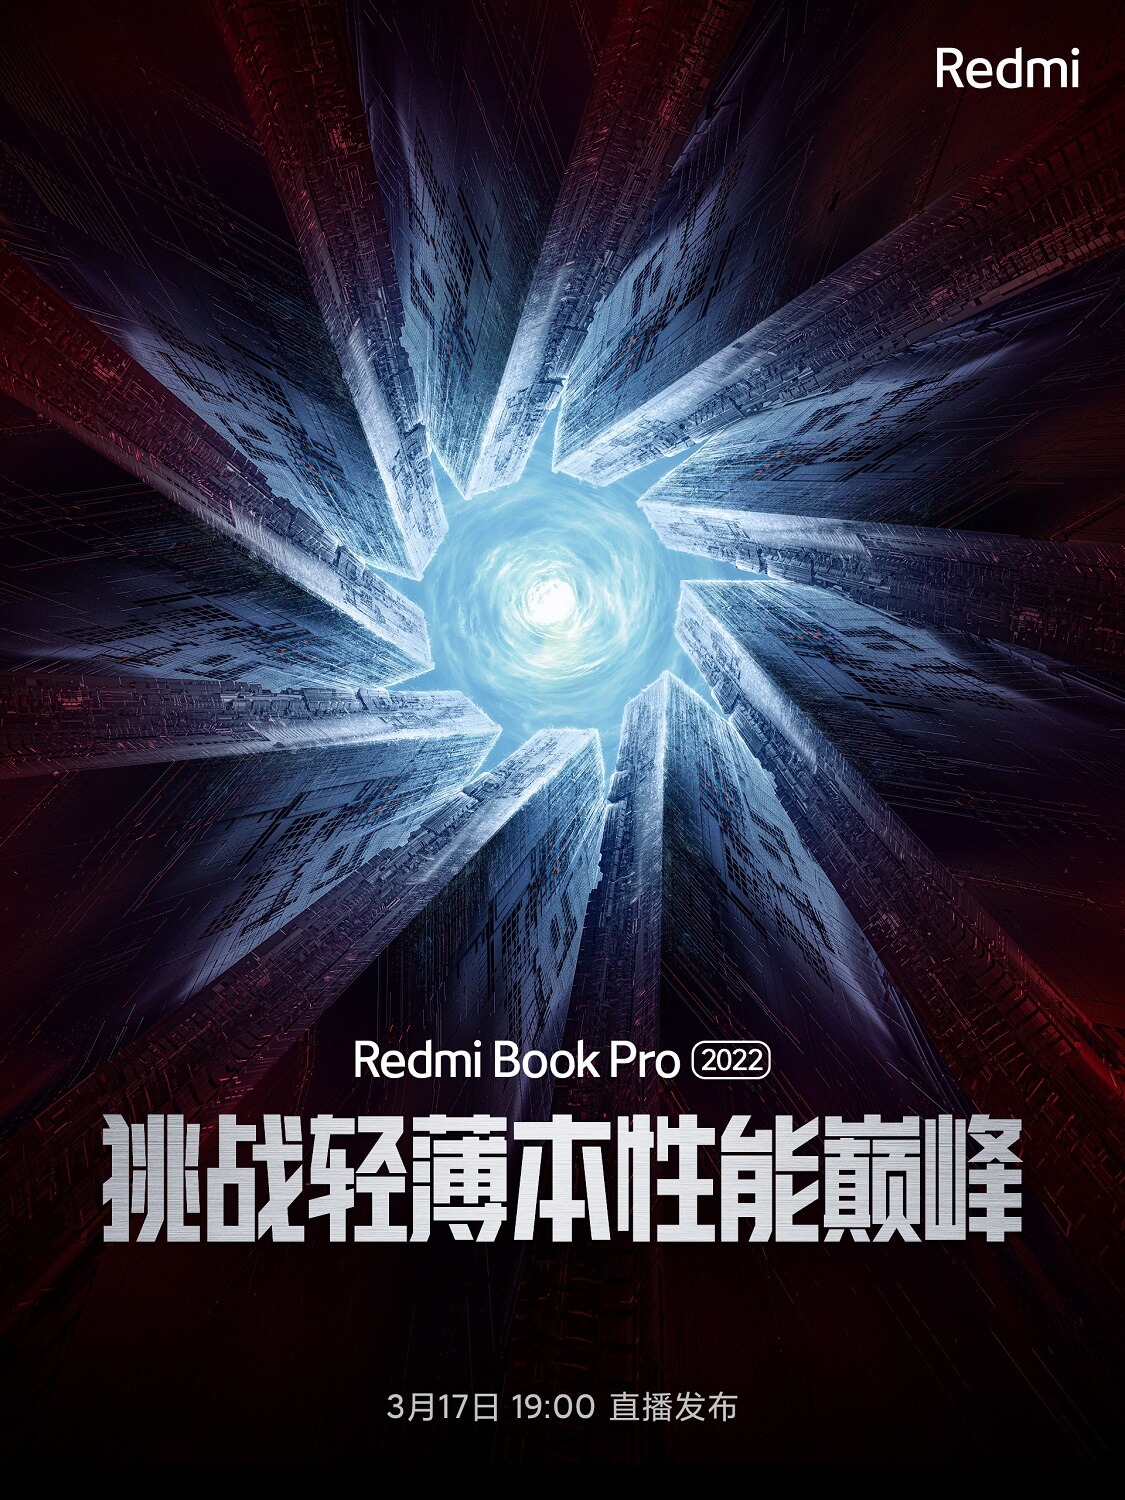 Redmi Book Pro 2022 launch date